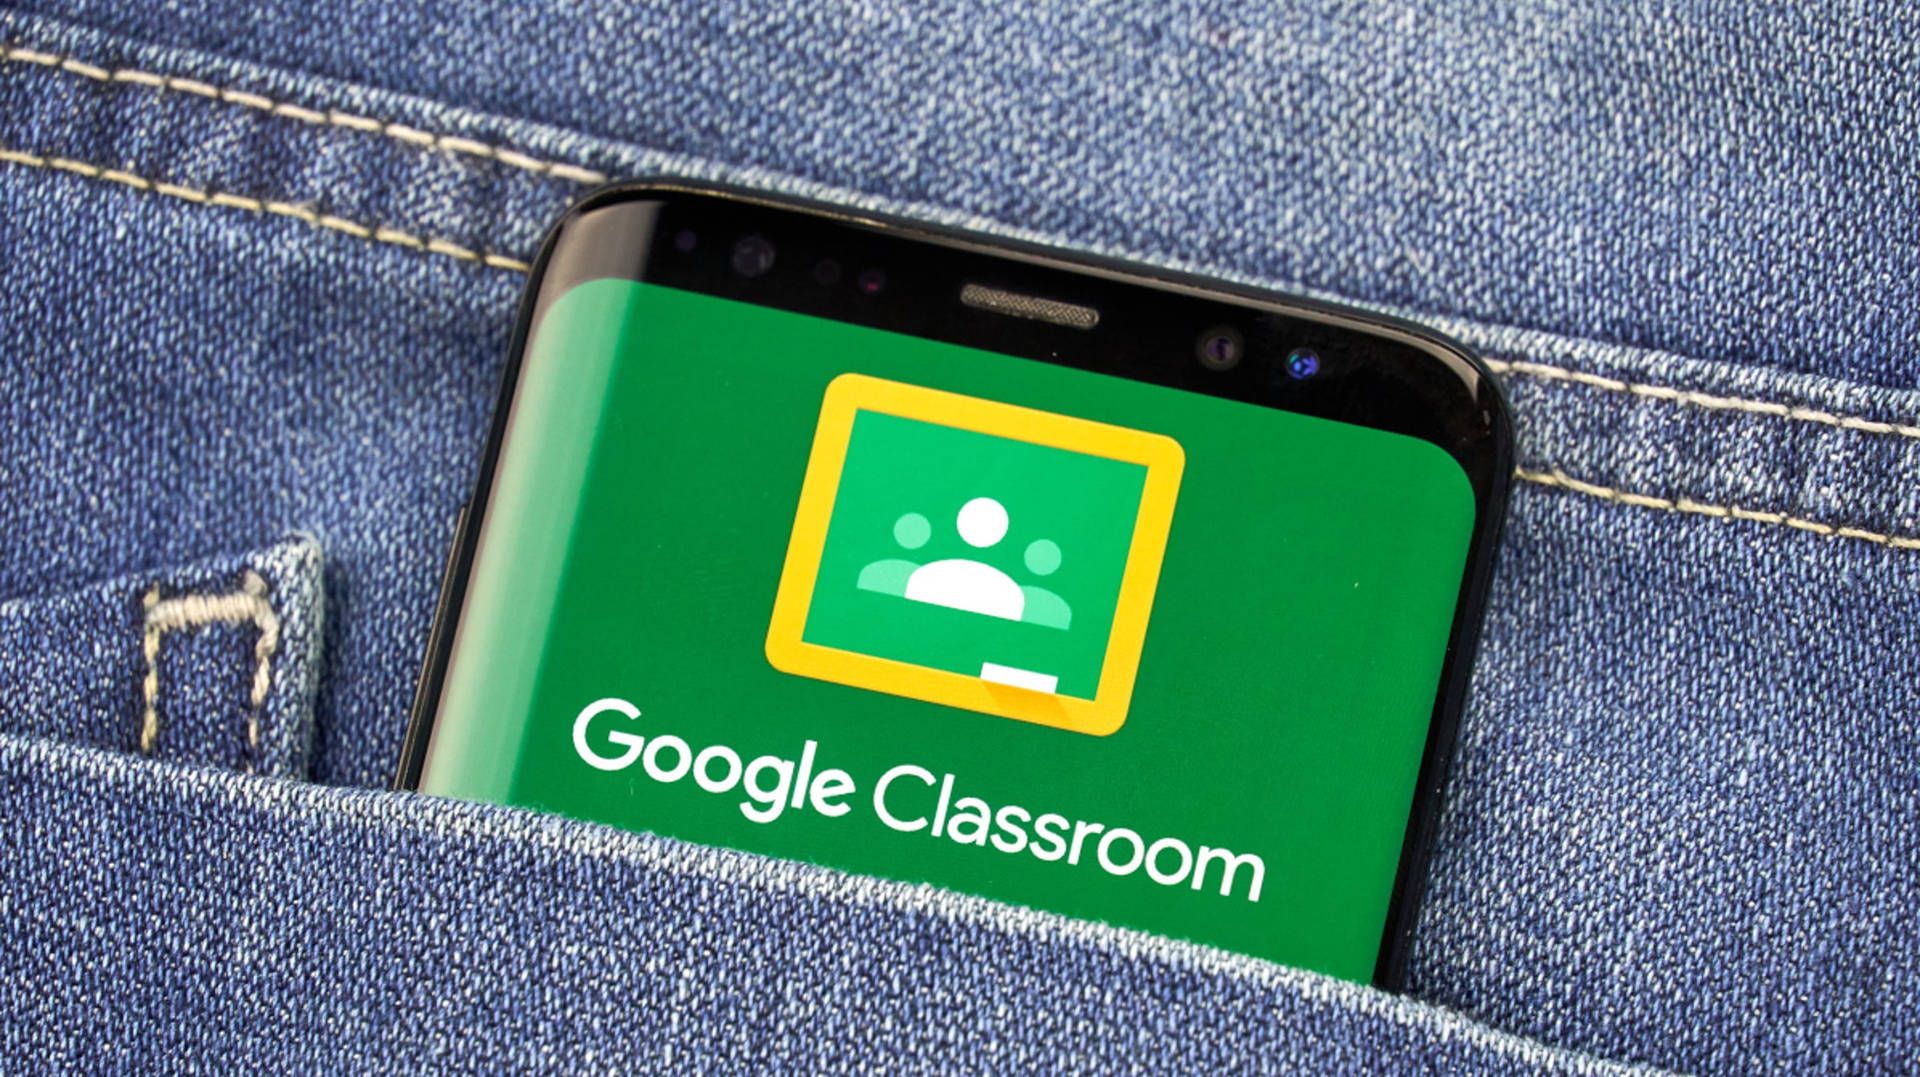 Google Classroom App On Phone In Pocket Wallpaper